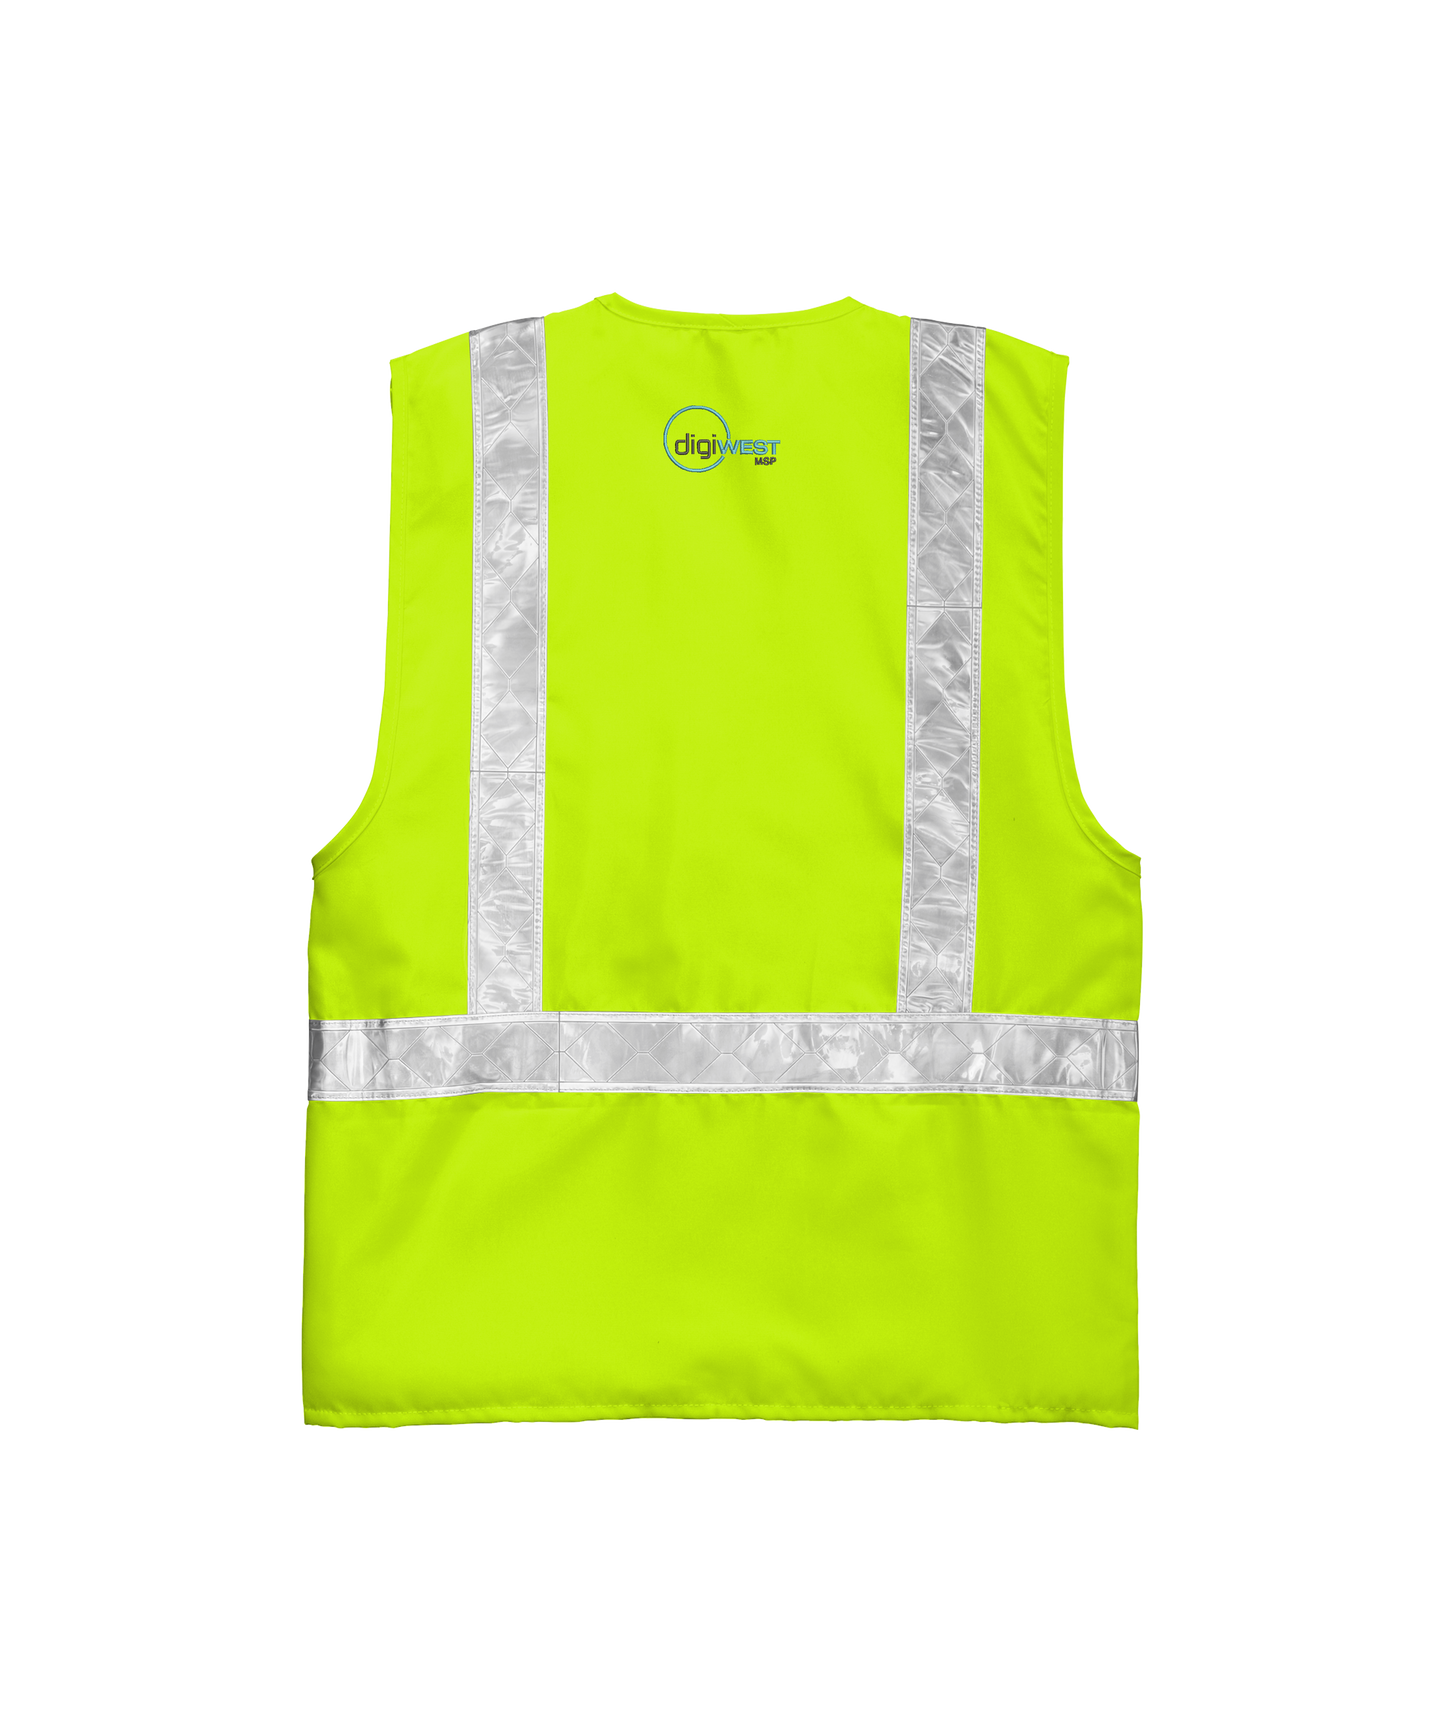 Port Authority® Enhanced Visibility Vest